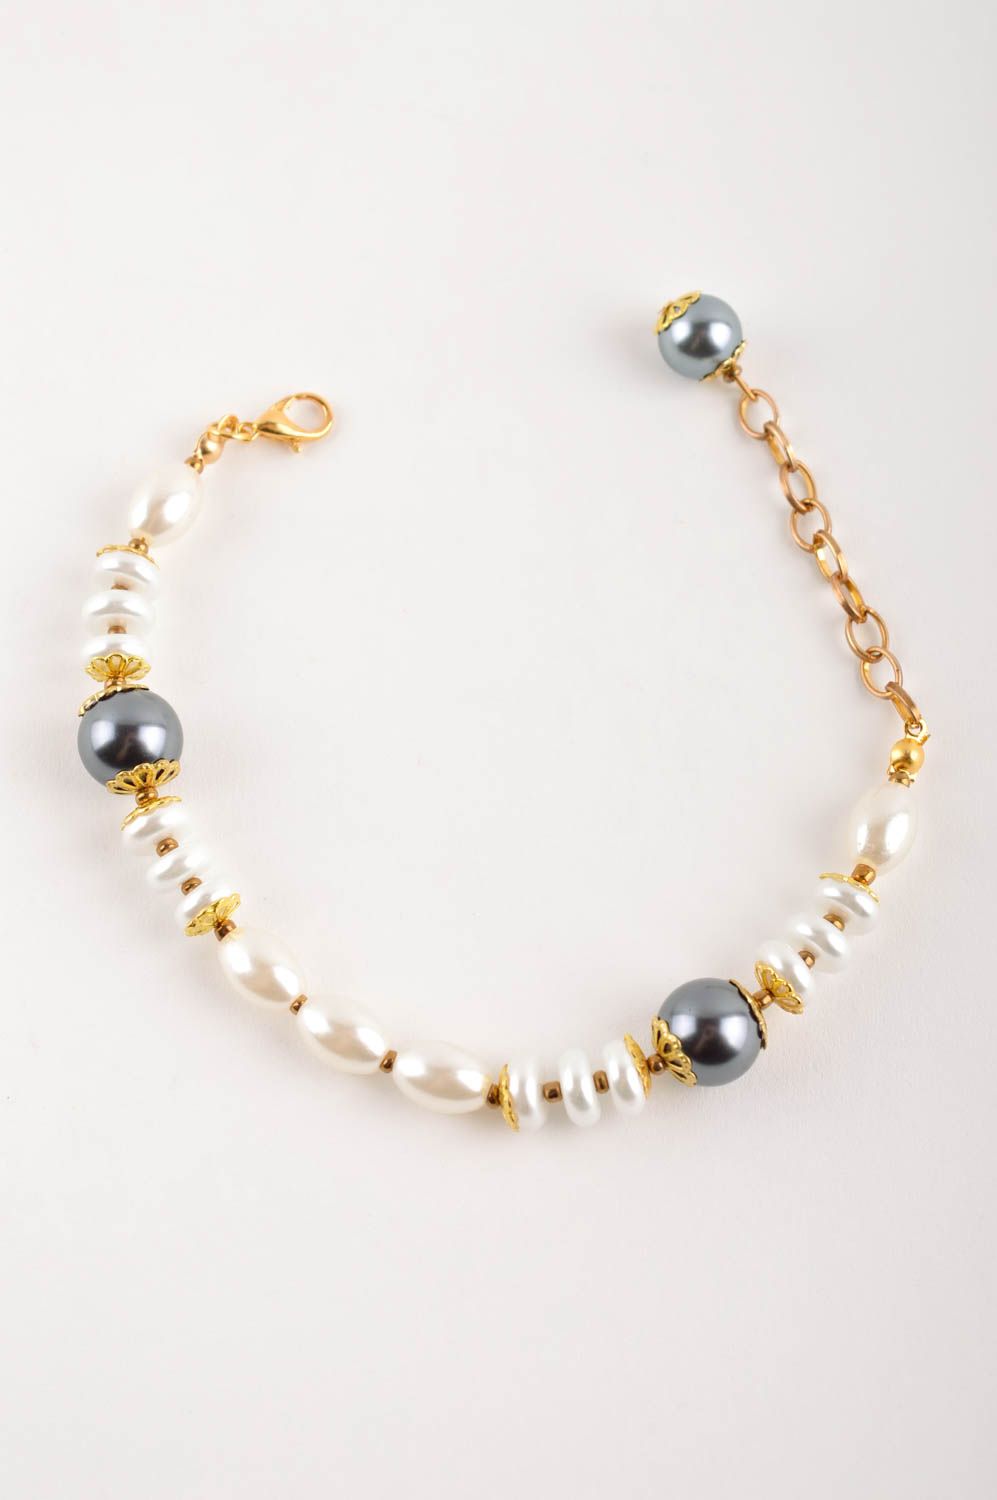 Handmade bracelet on chain evening accessory stylish jewelry present for women photo 5